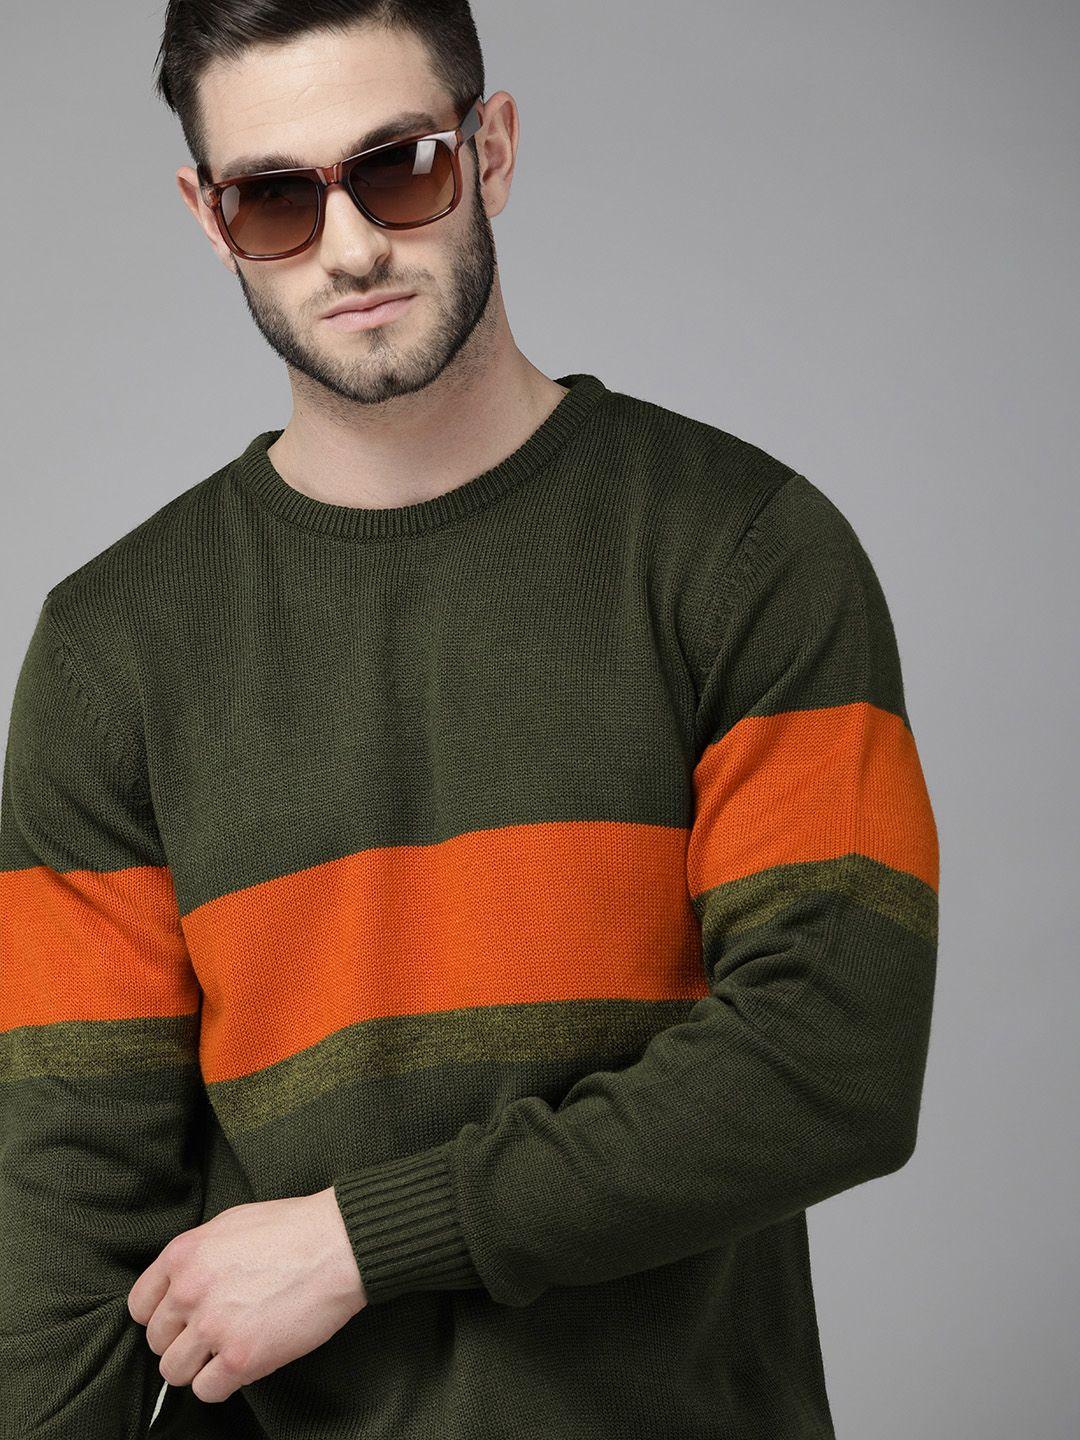 roadster men olive green & orange striped acrylic regular pullover sweater